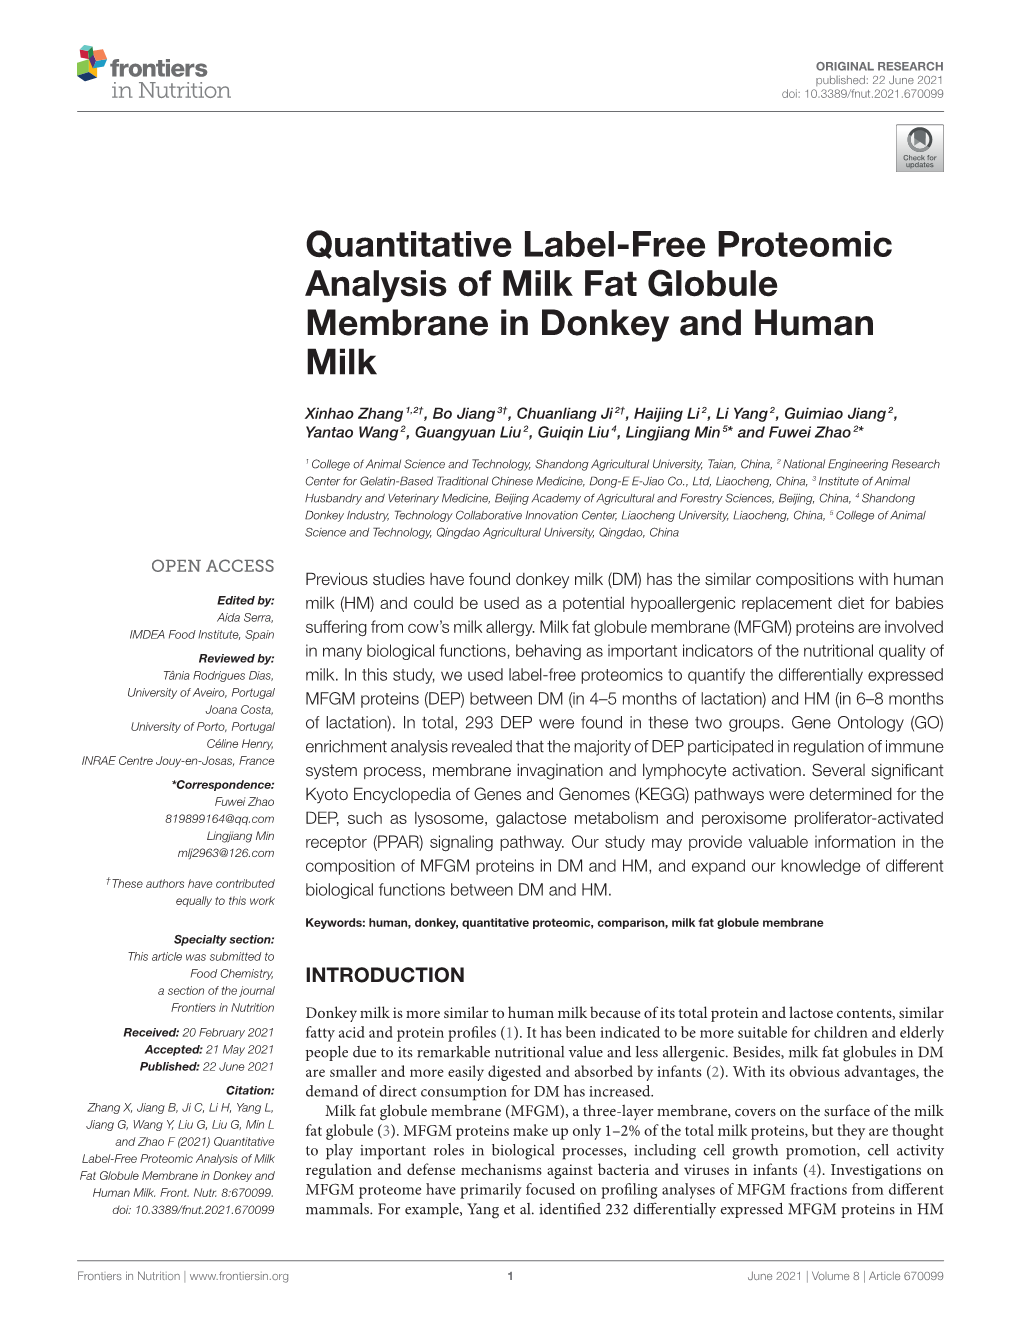 Quantitative Label-Free Proteomic Analysis of Milk Fat Globule Membrane in Donkey and Human Milk